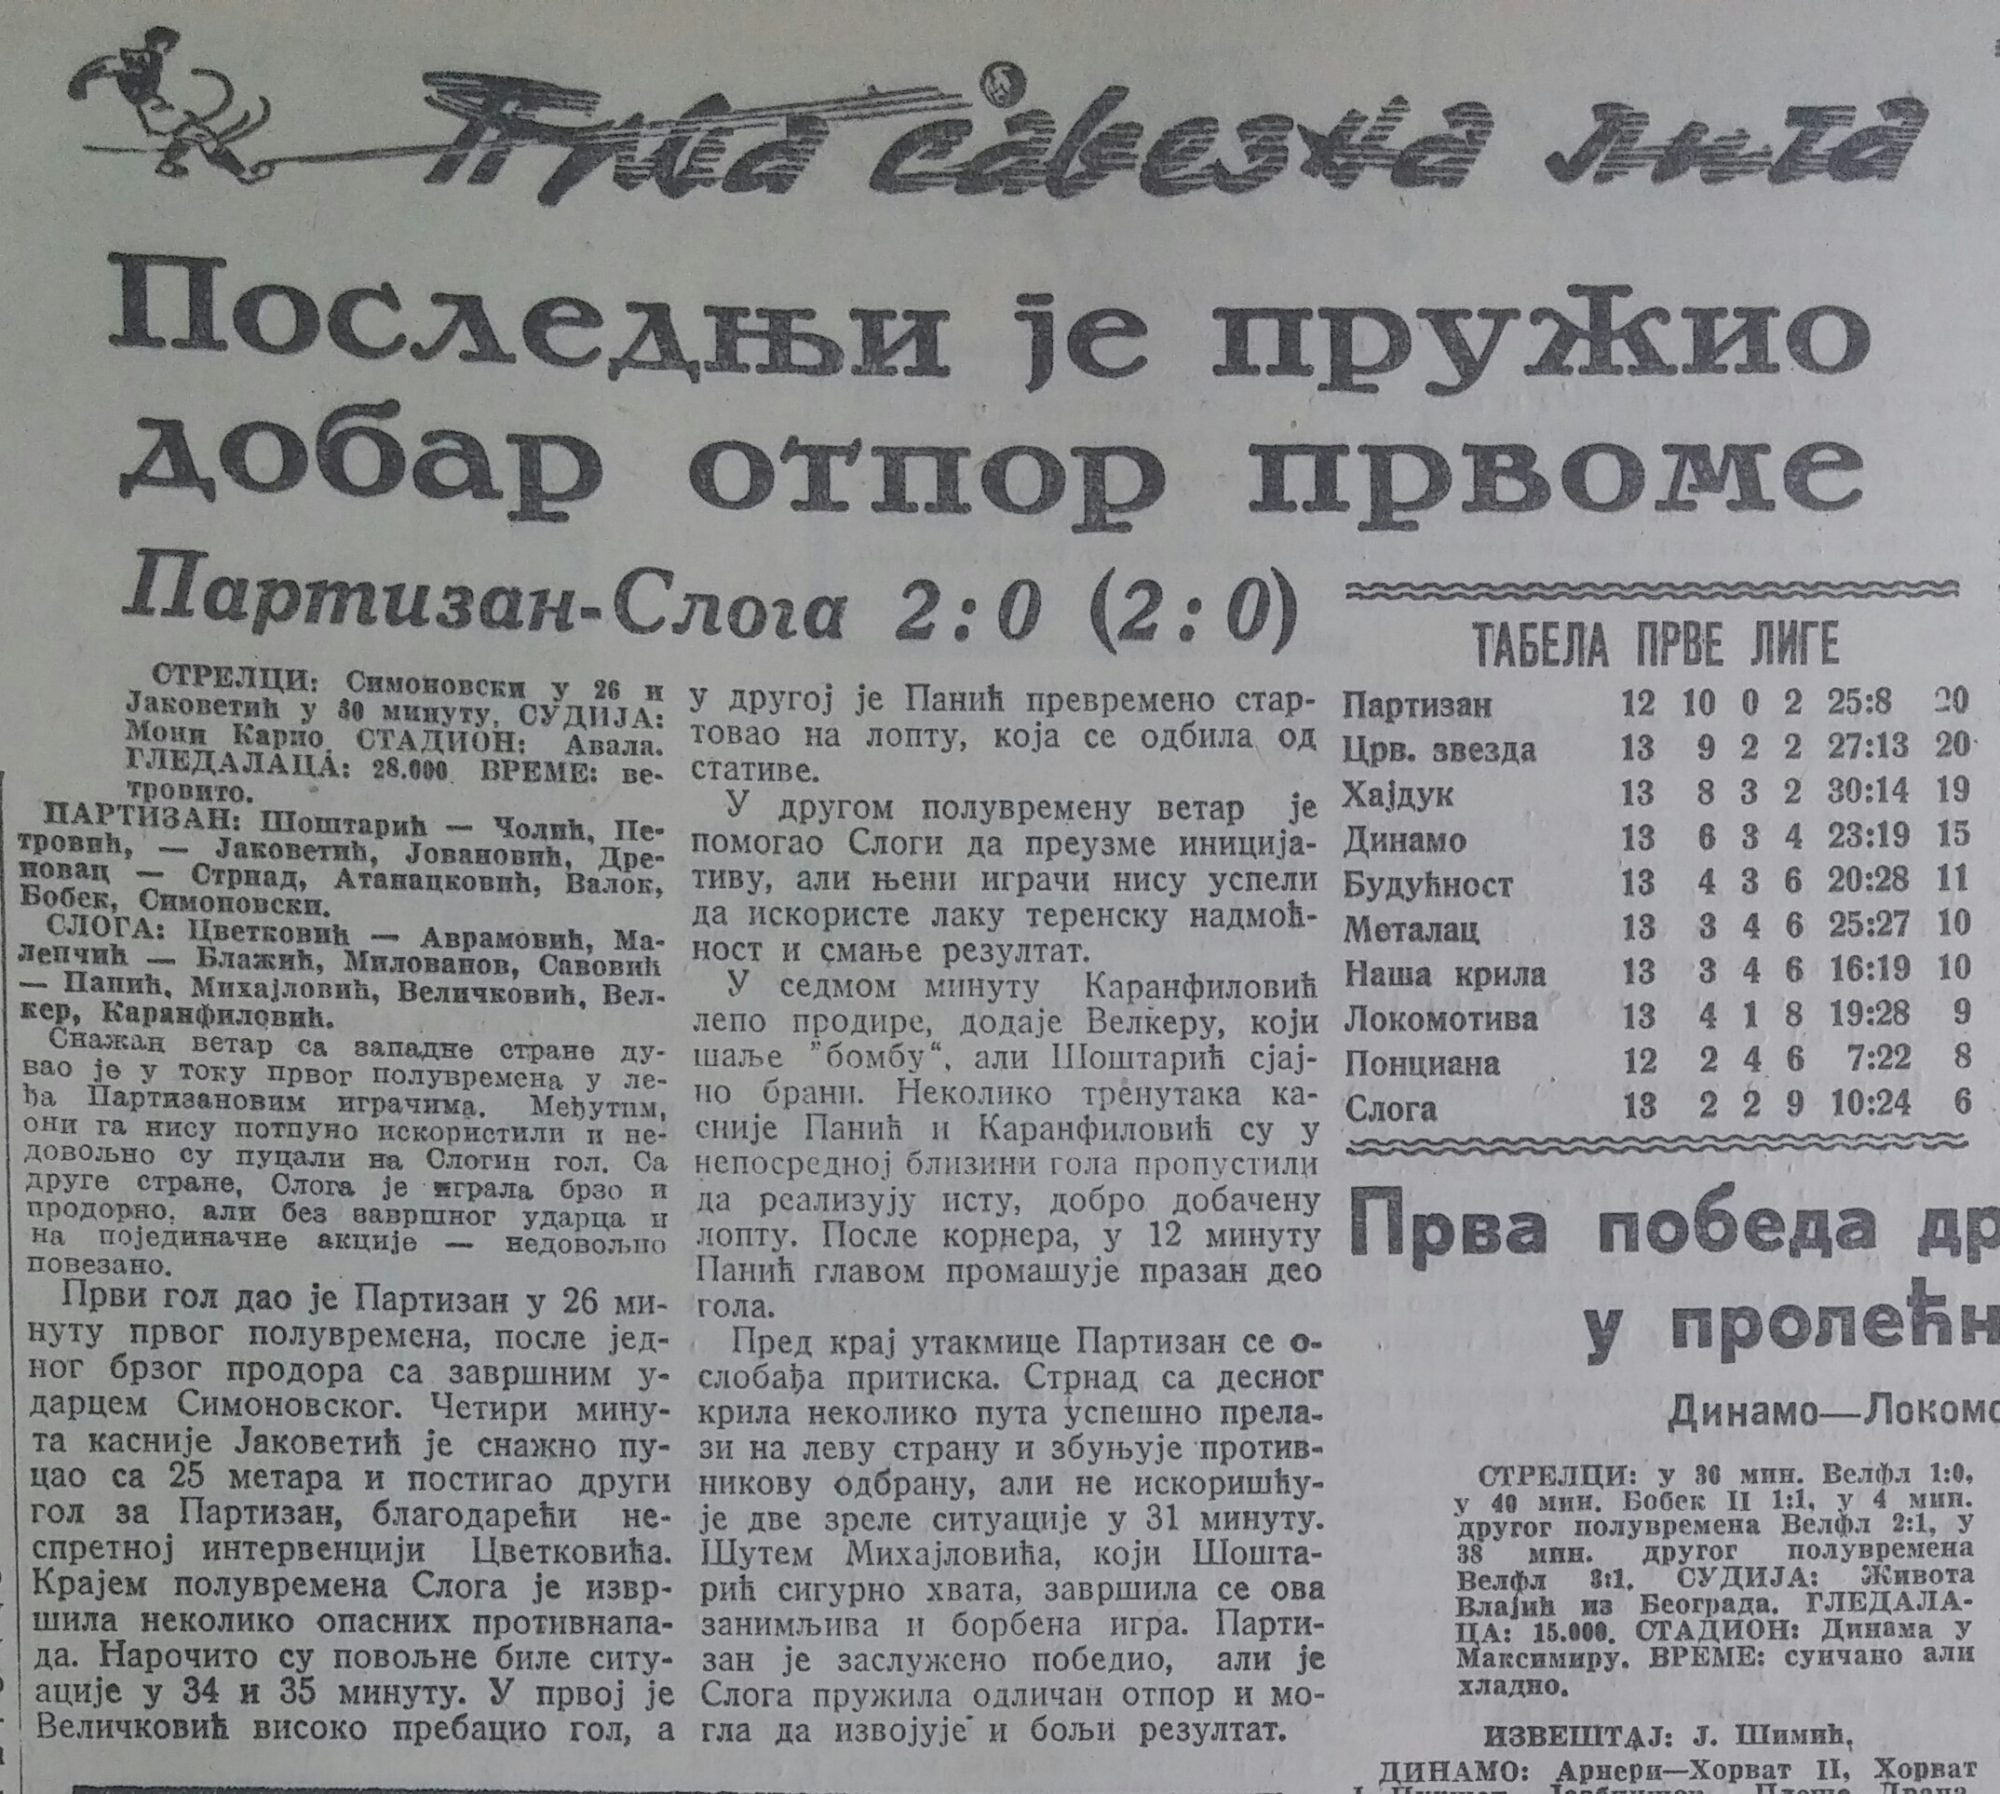 SEZONA 1948/49 16.-10.4.1949.-sloga-partizan-0-2